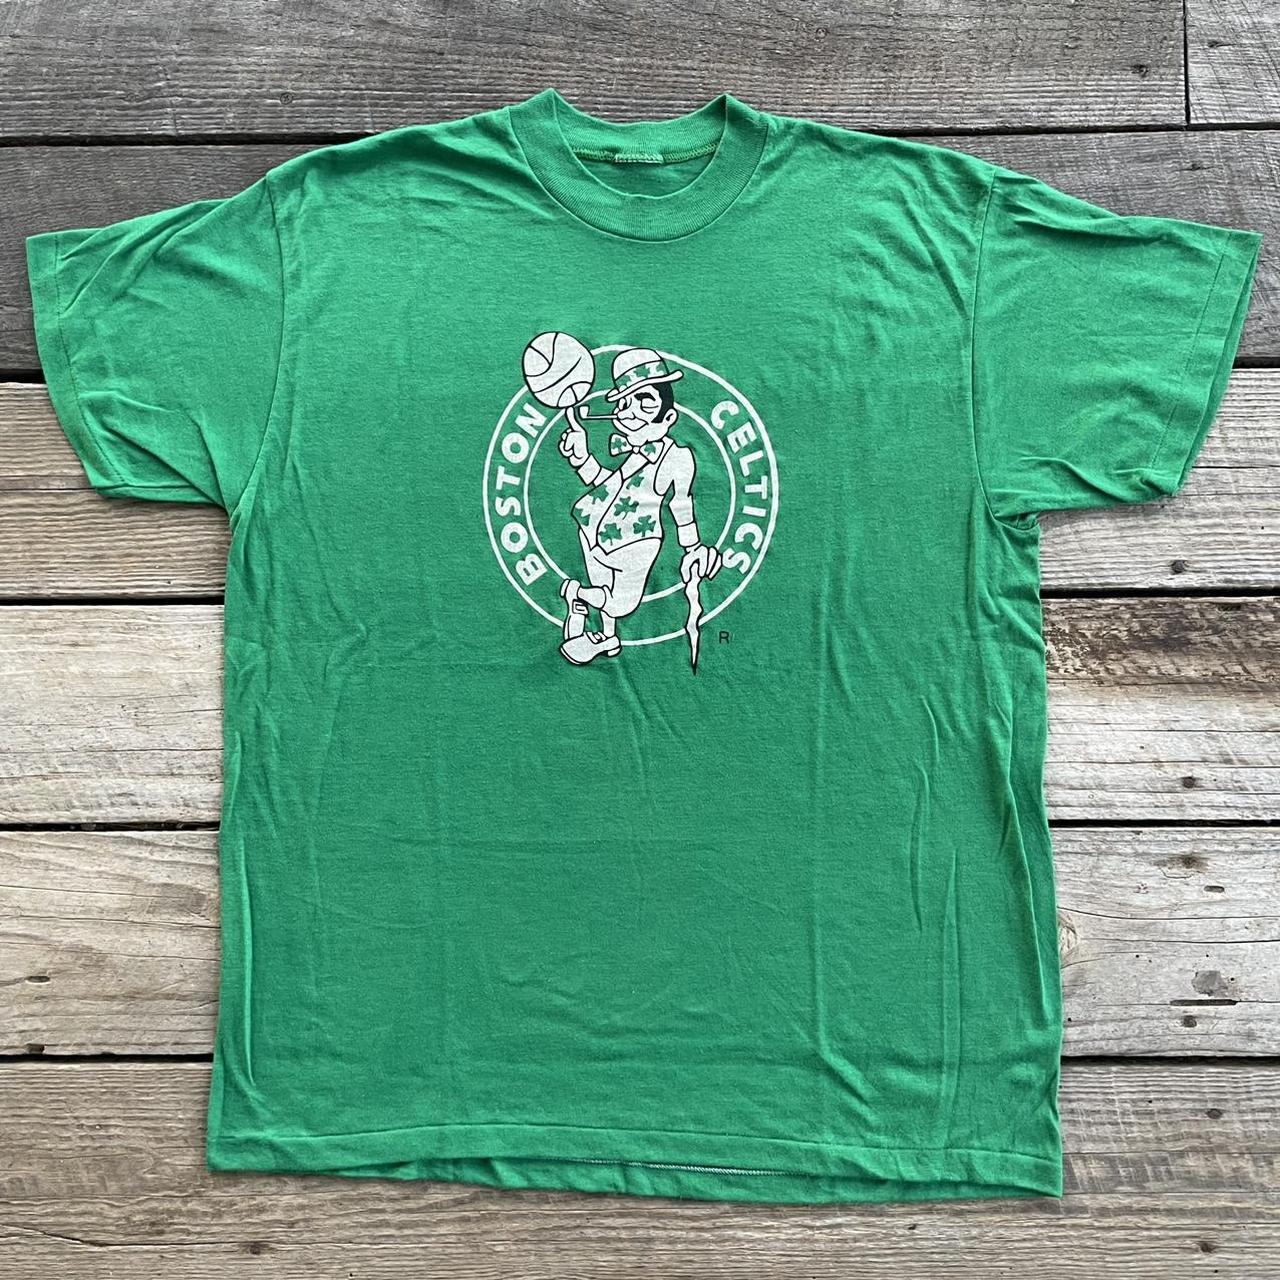 Thin Celtics t-shirt